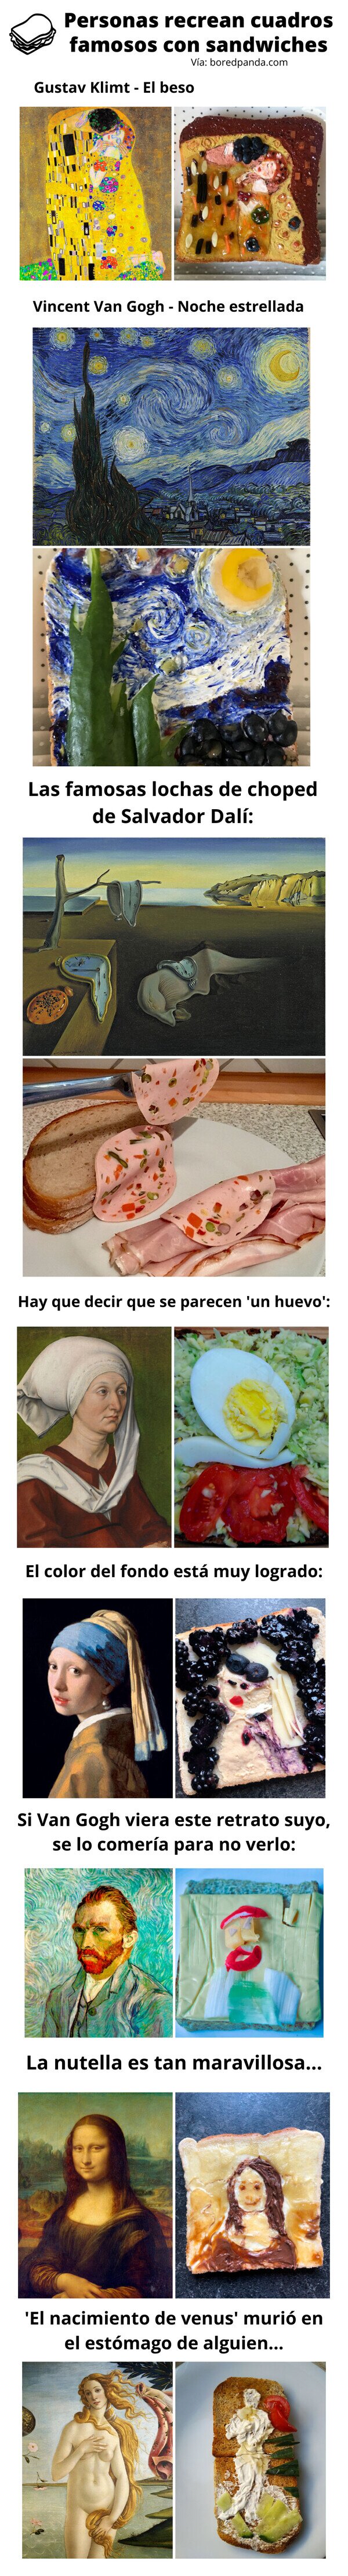 Meme_otros - Personas recrean cuadros famosos con sandwiches